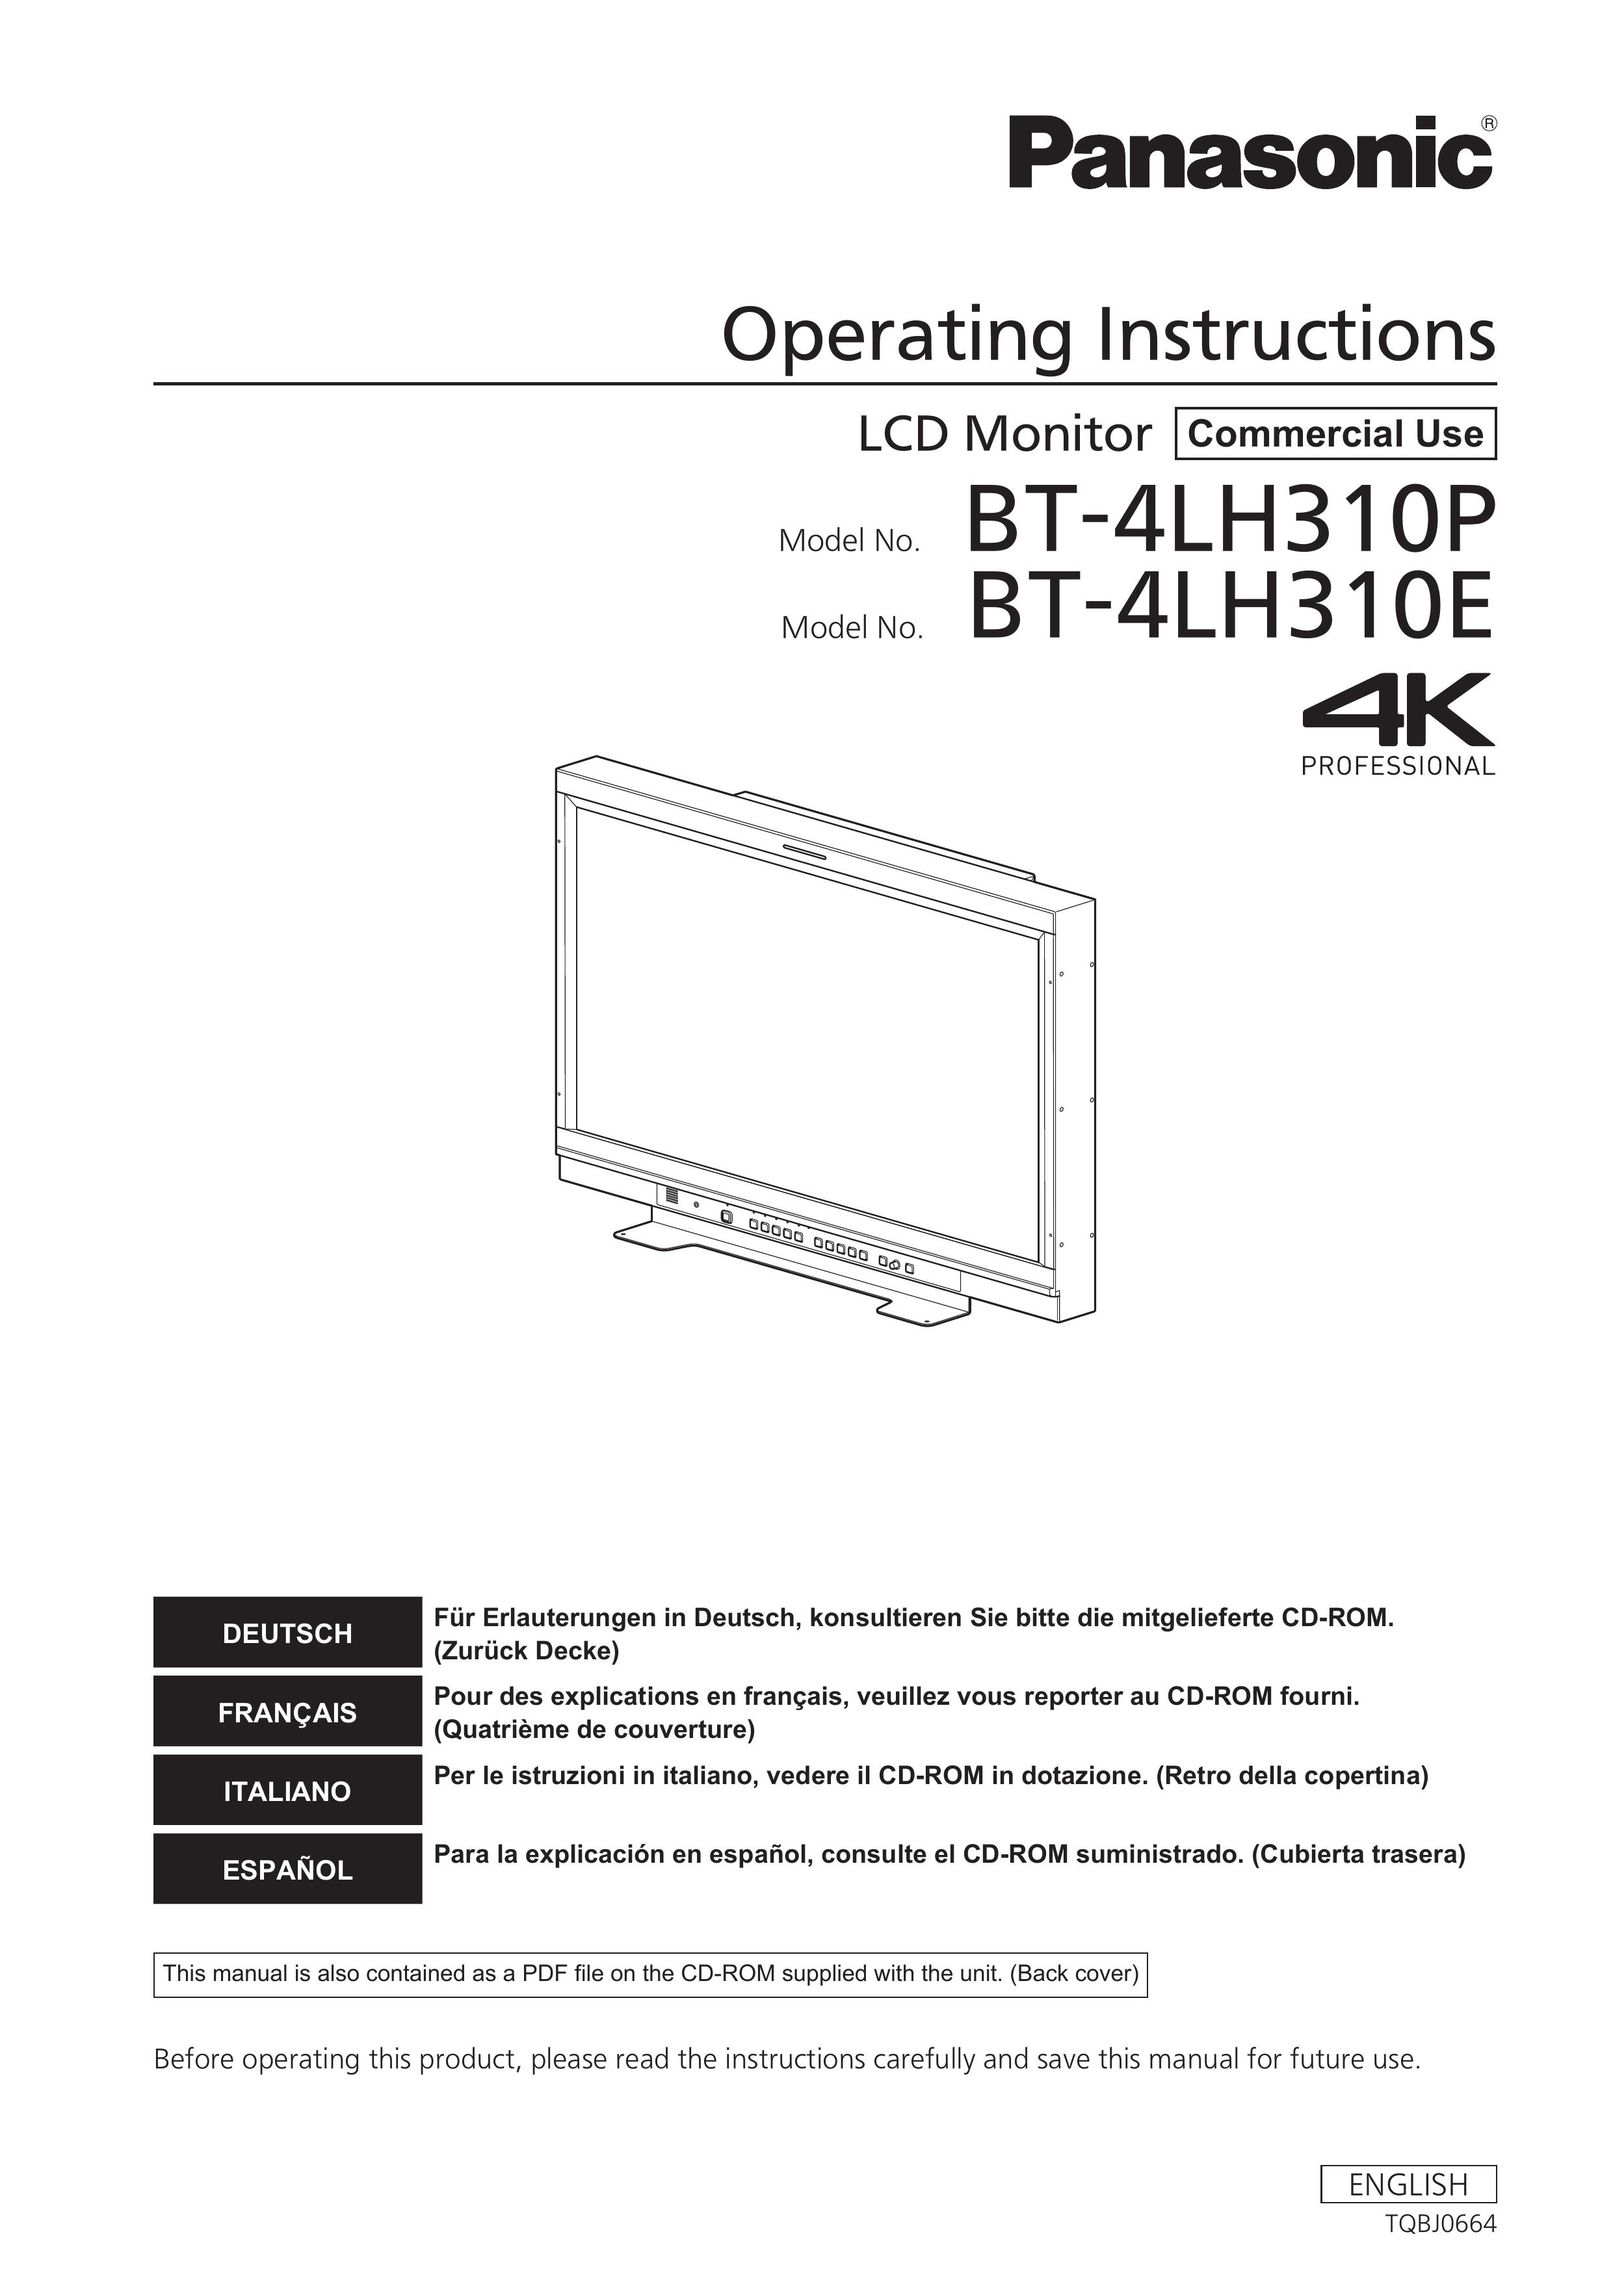 Panasonic BT-4LH310 Computer Monitor User Manual